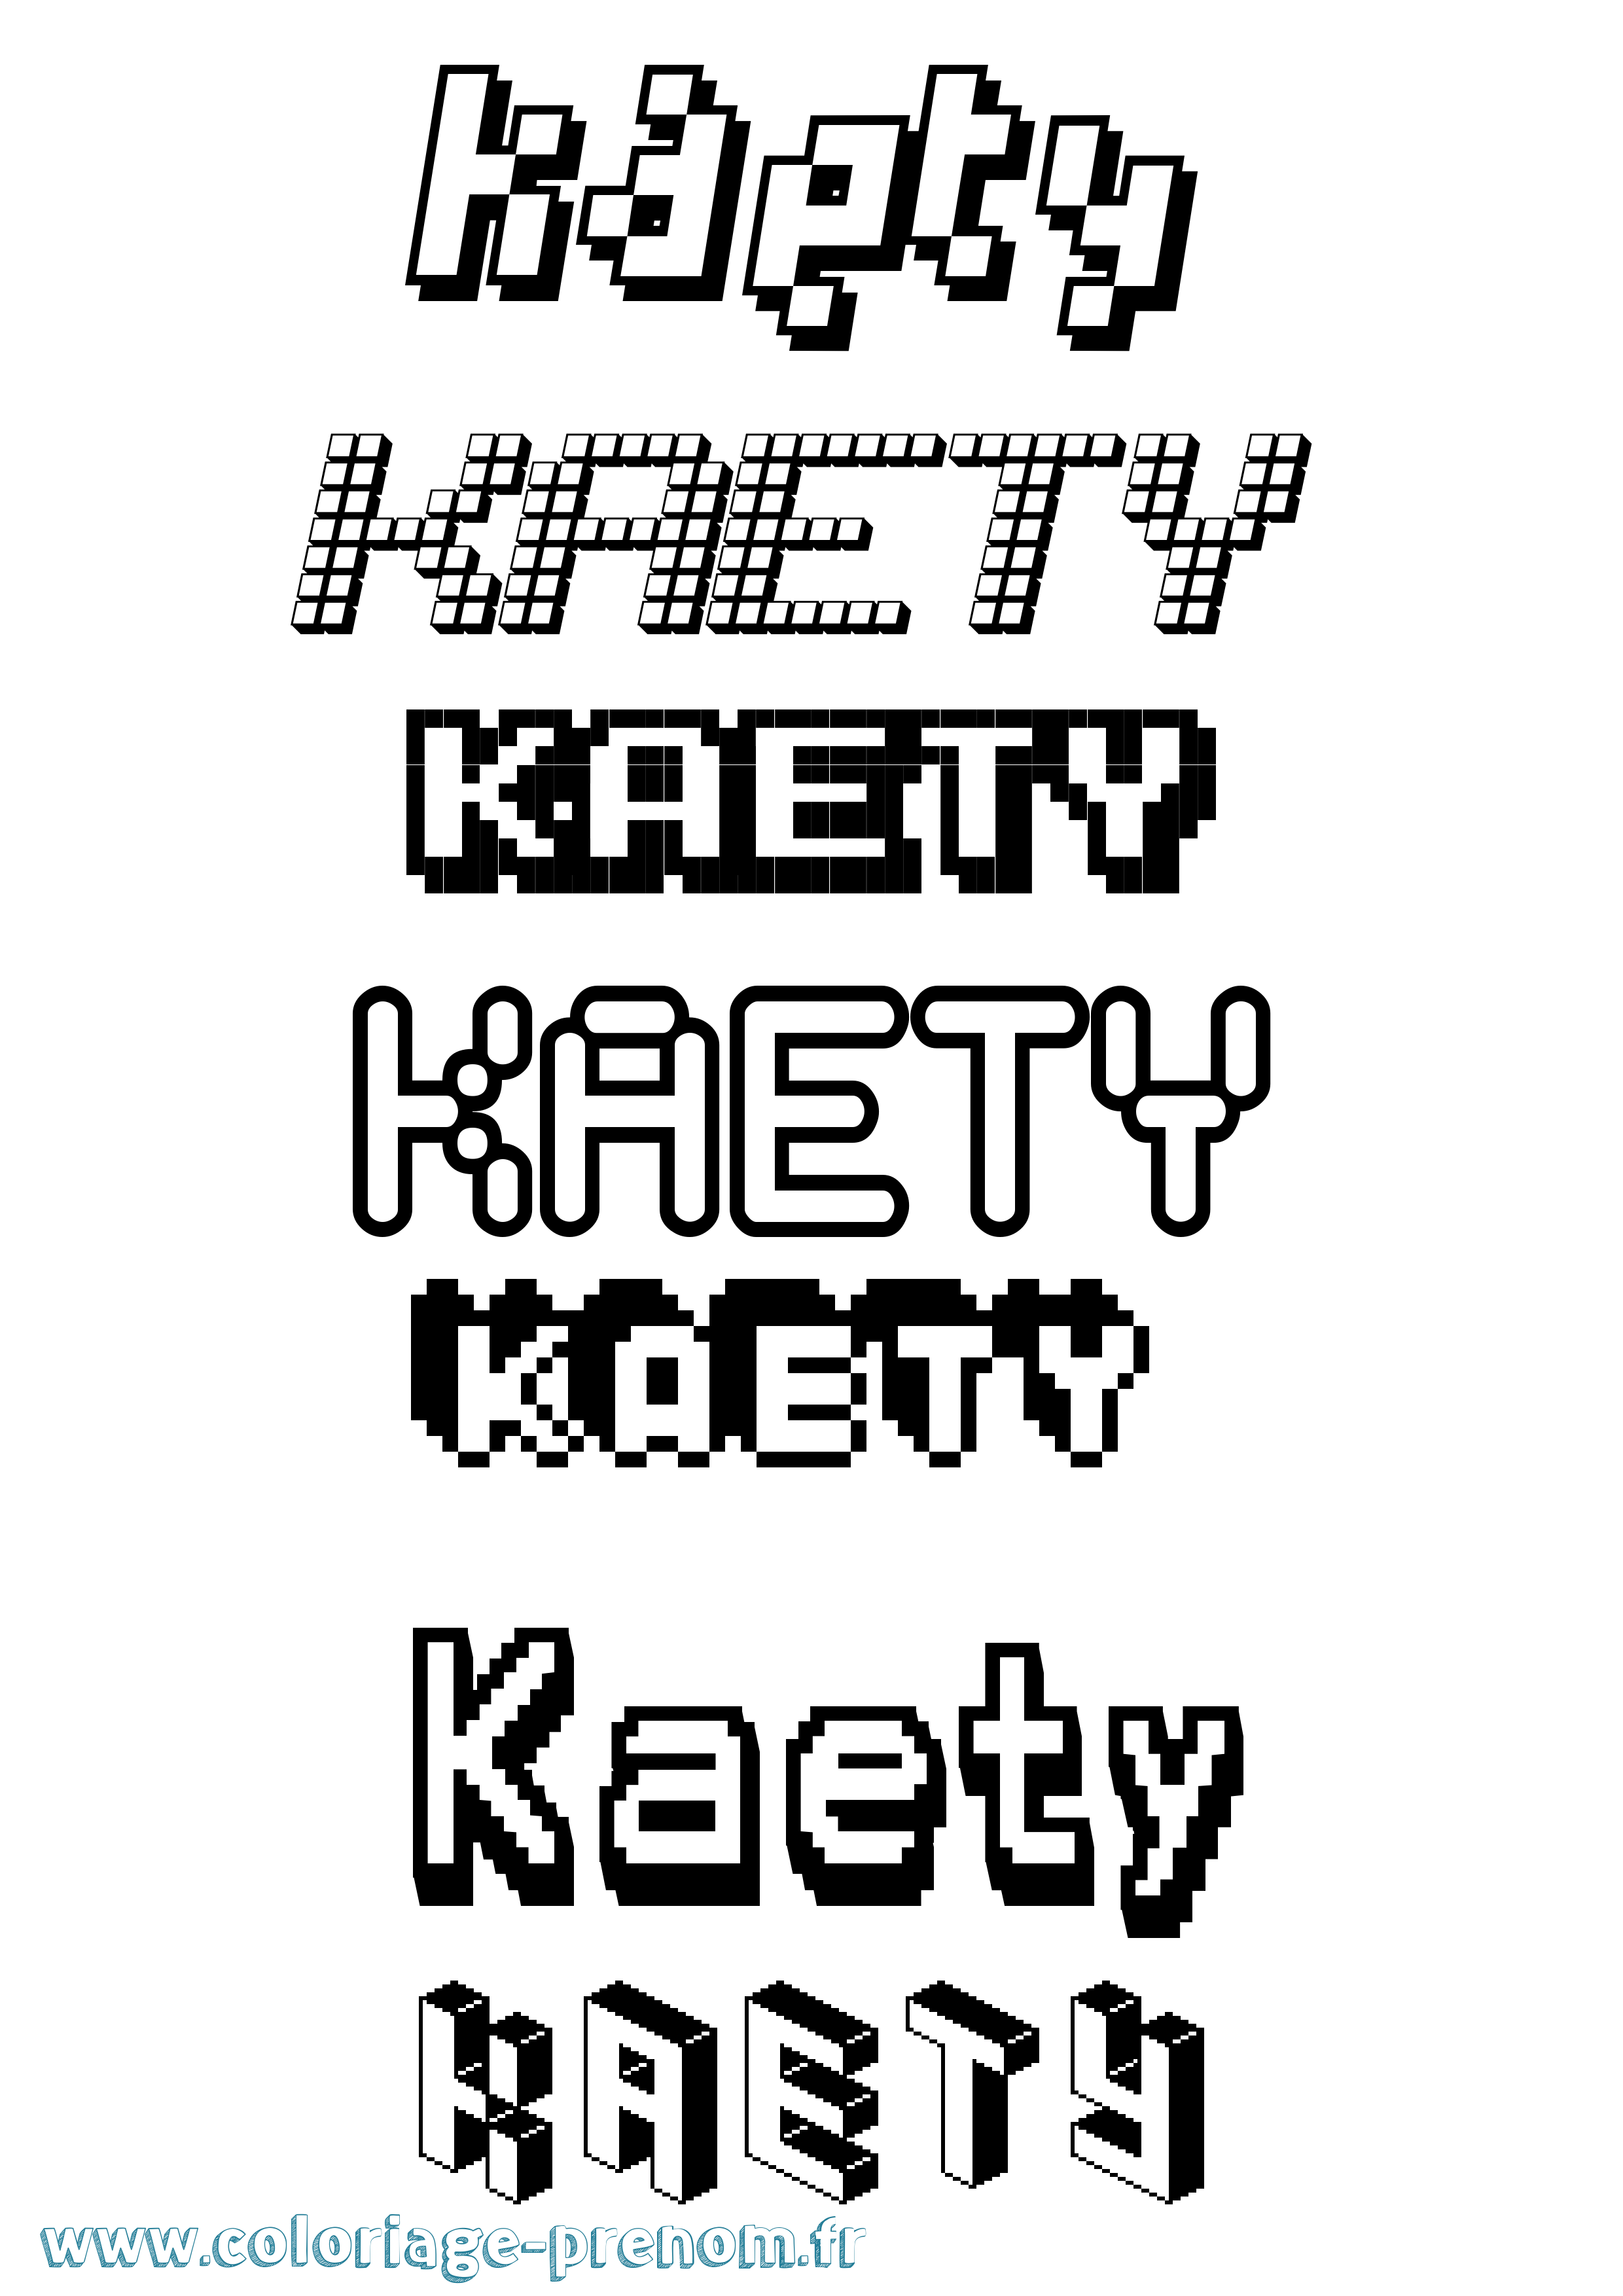 Coloriage prénom Kaety Pixel